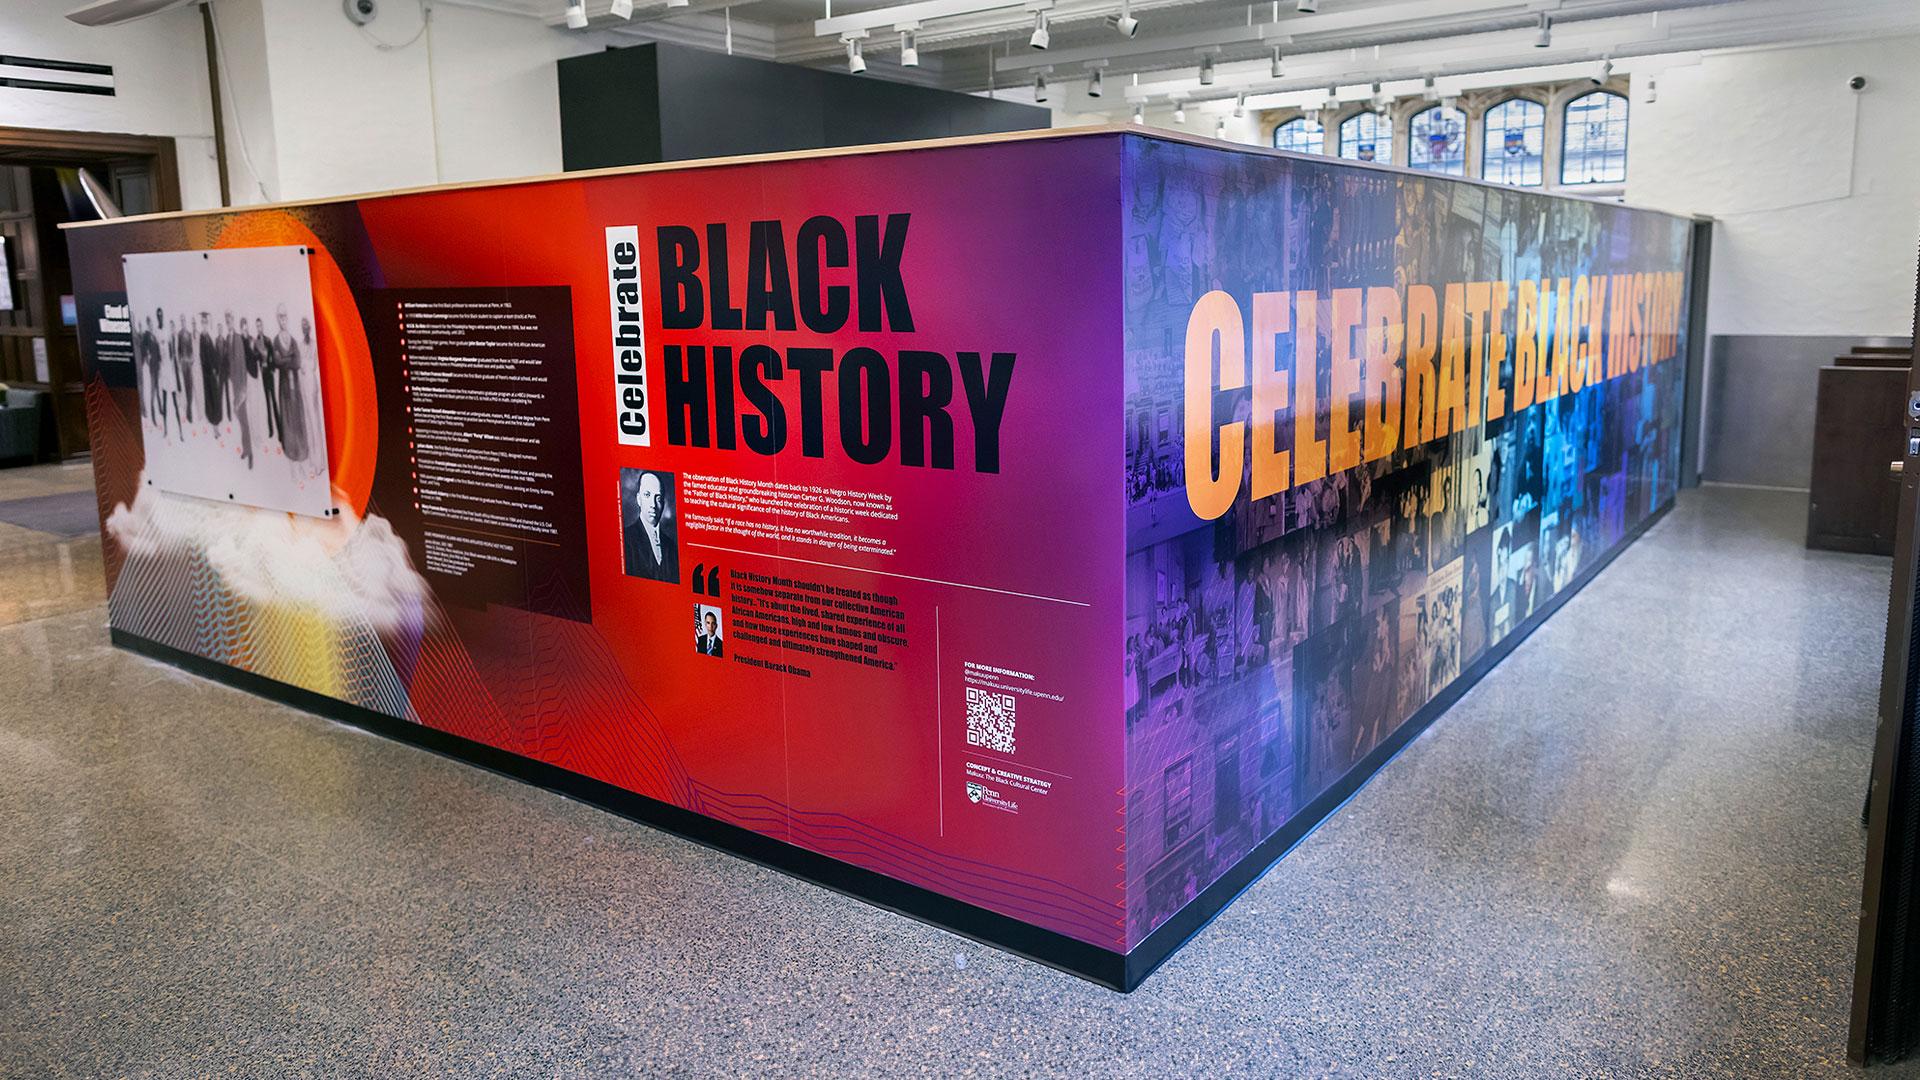 Picture of Black History exhibit